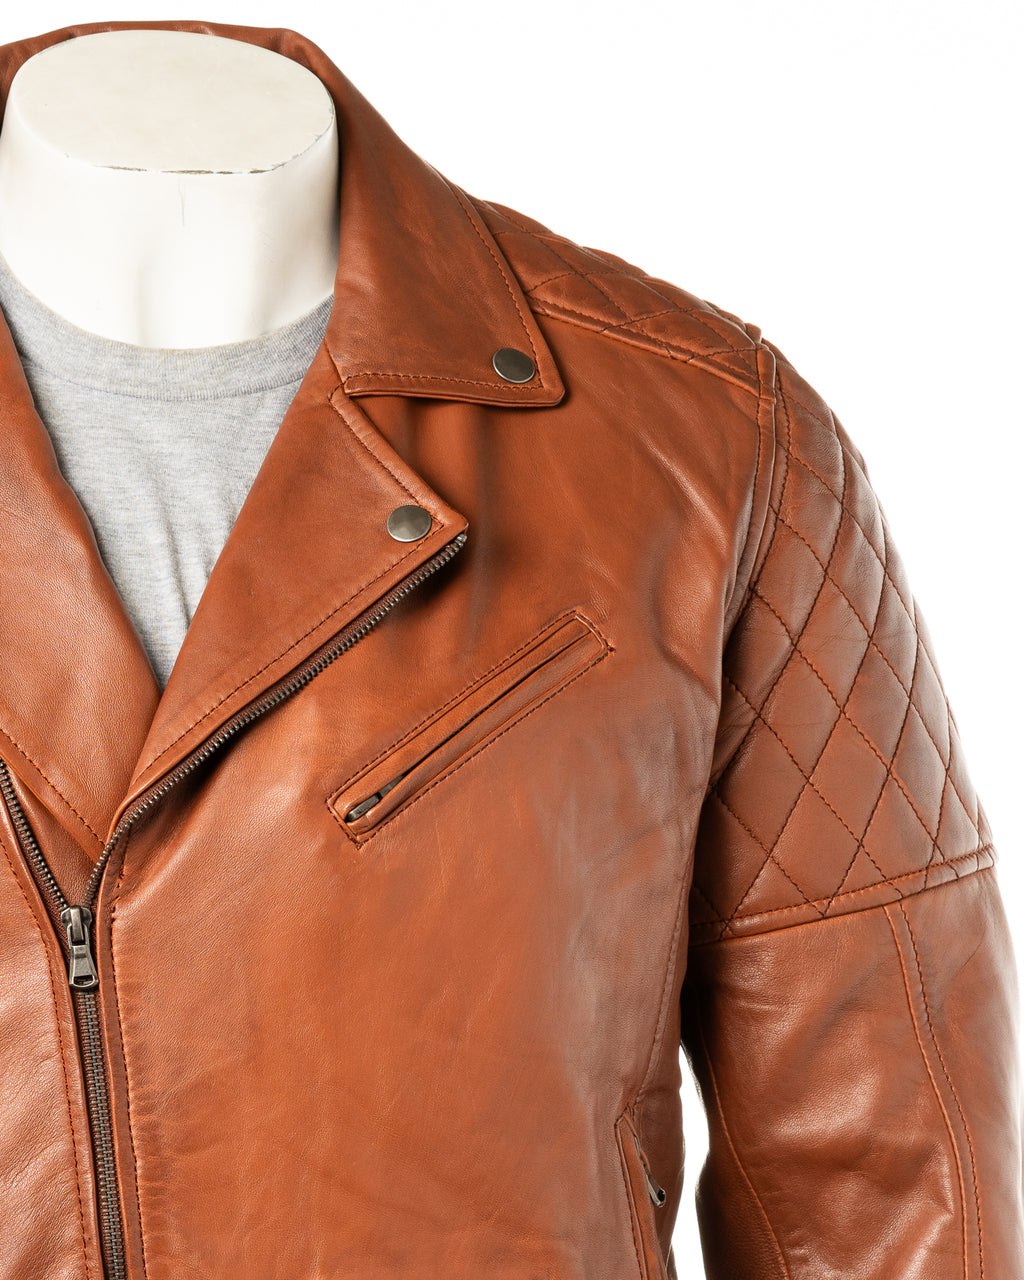 Men's Timber Vintage Look Biker Style Leather Jacket: Gaetano